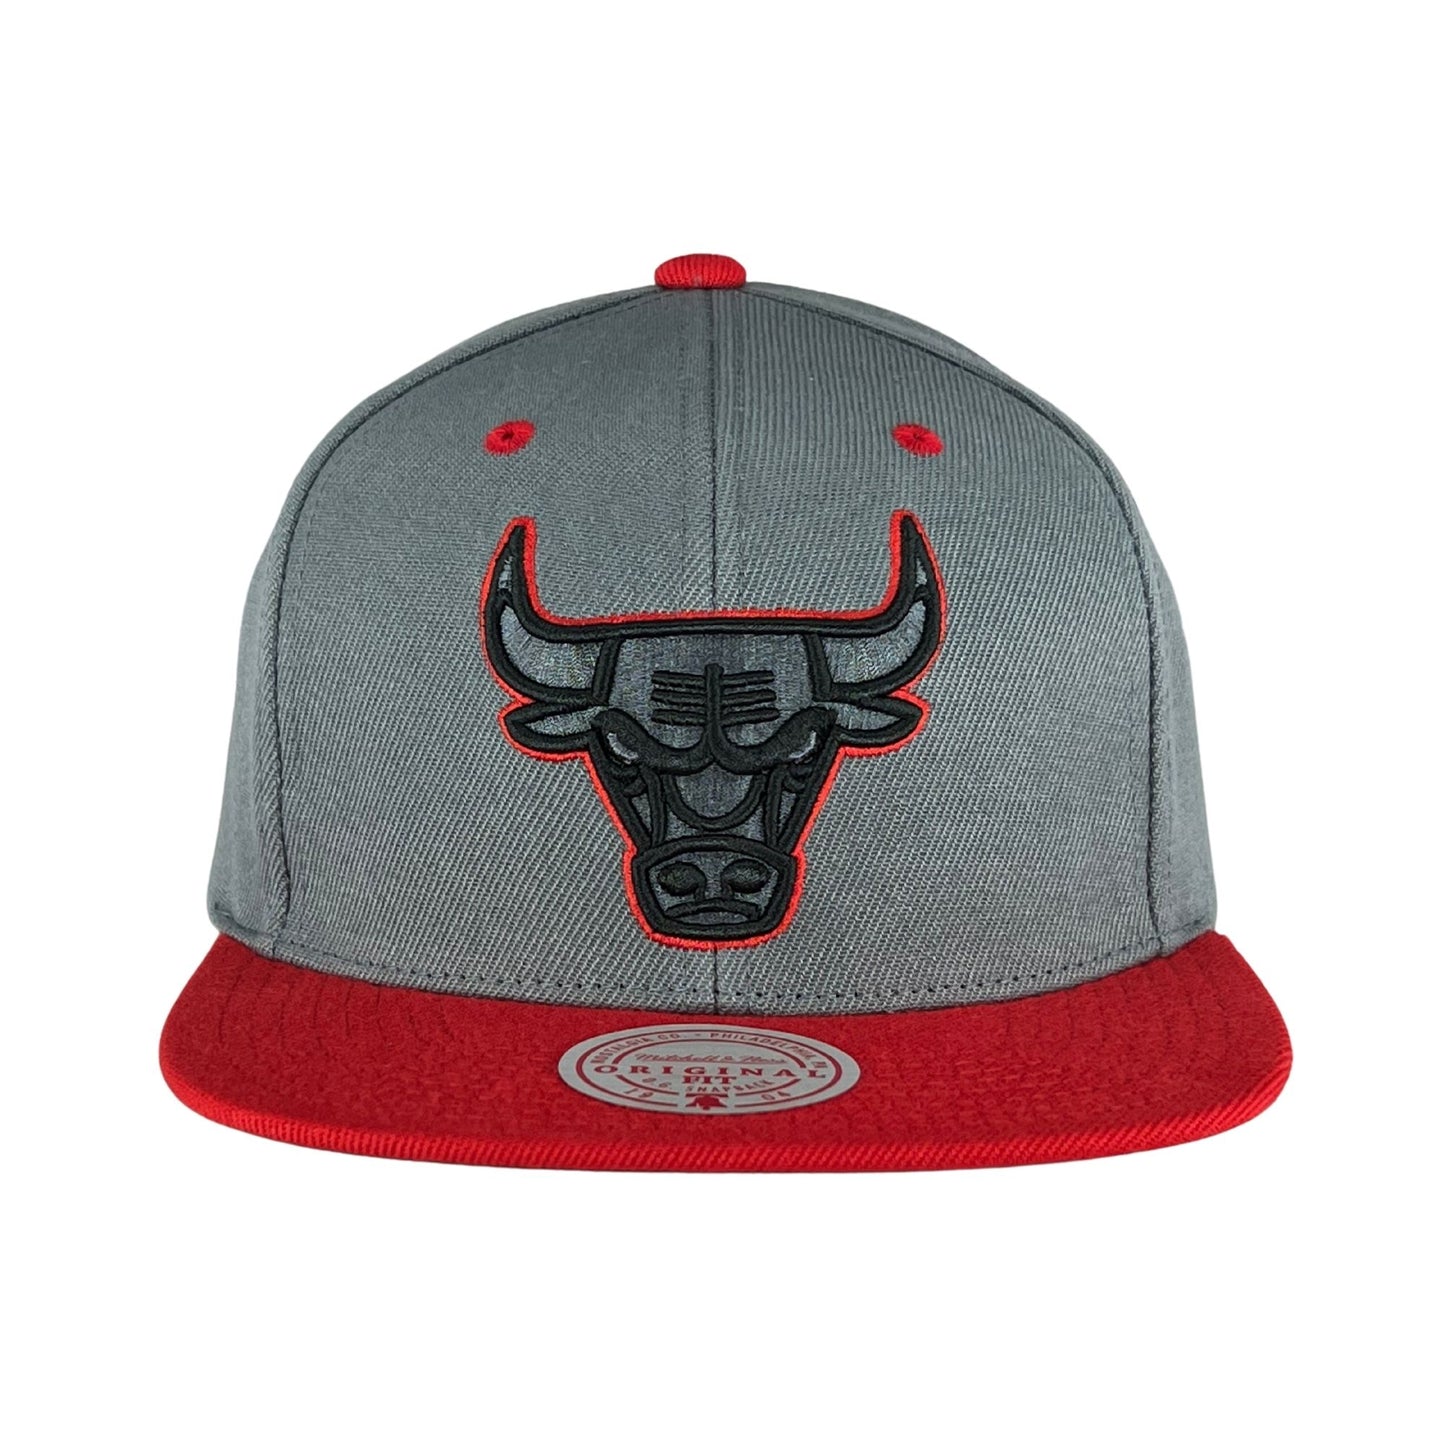 Chicago Bulls Grey/Red Snapback Hat